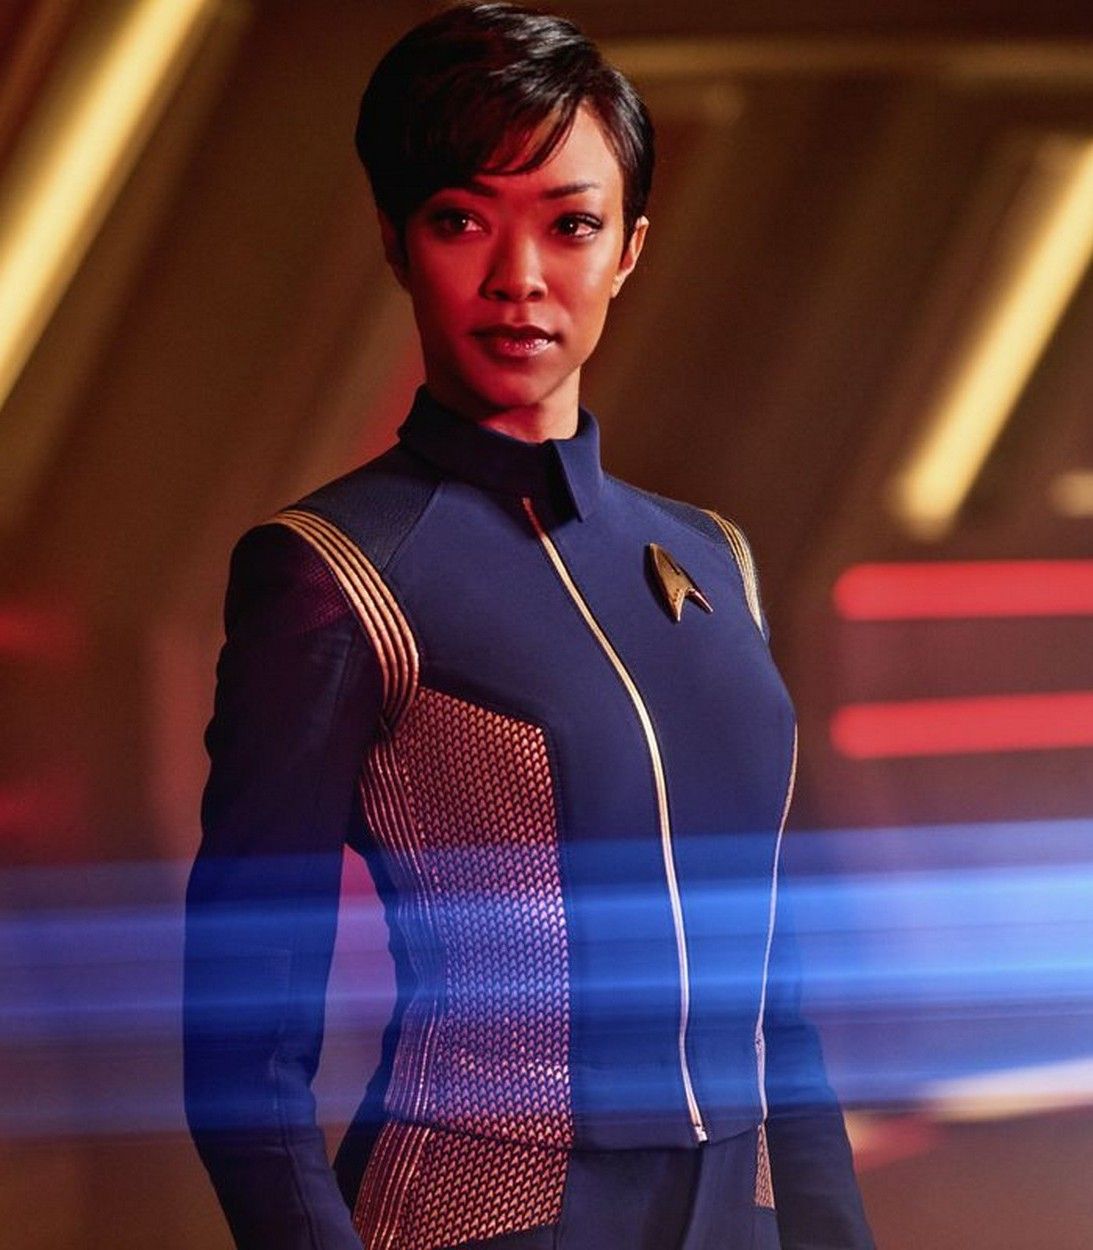 Sonequa Martin-Green as Michael Burnham in Star Trek Discovery vertical